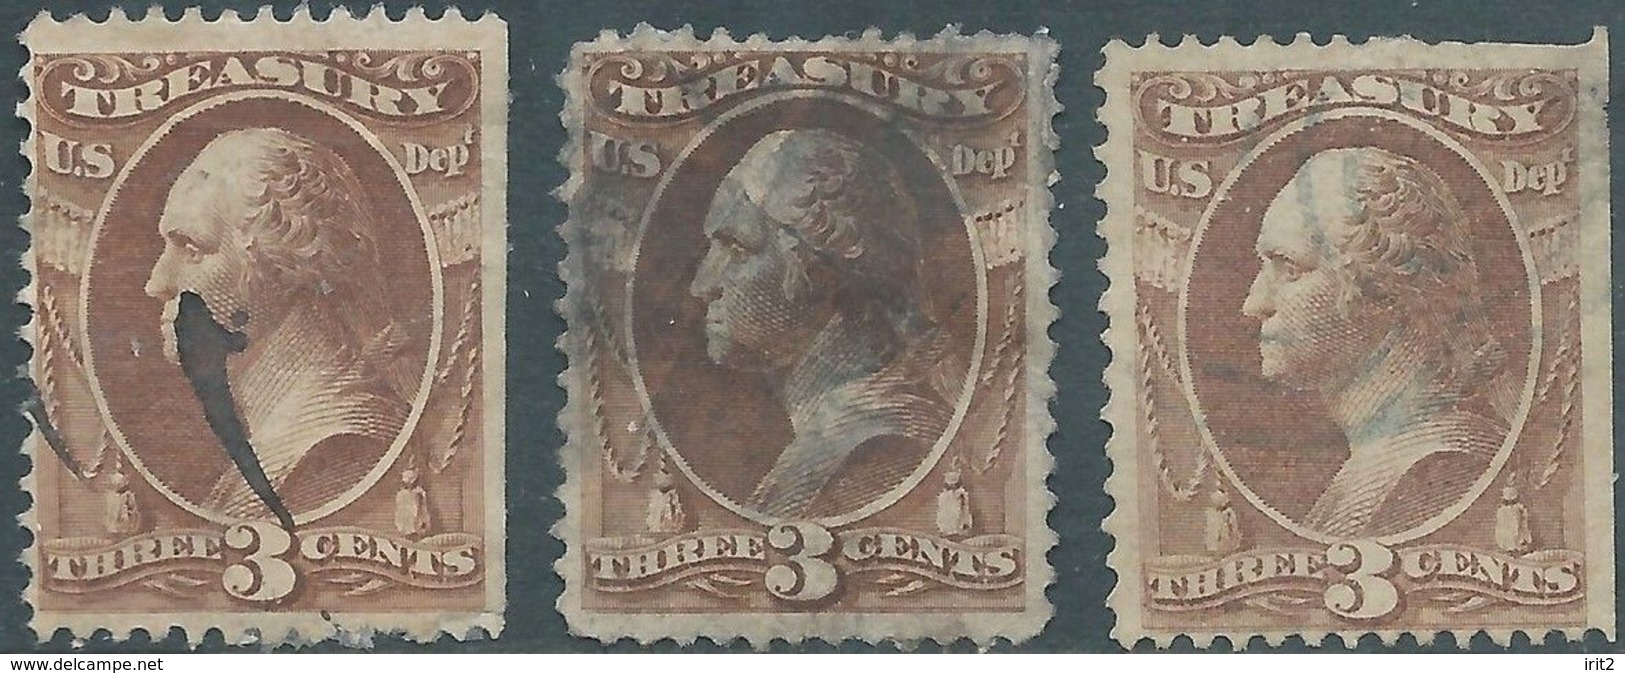 Stati Uniti D'america,United States,U.S.A,1873 Revenue Stamps 3c MINISTRY OF TREASURY,Used - Oficial